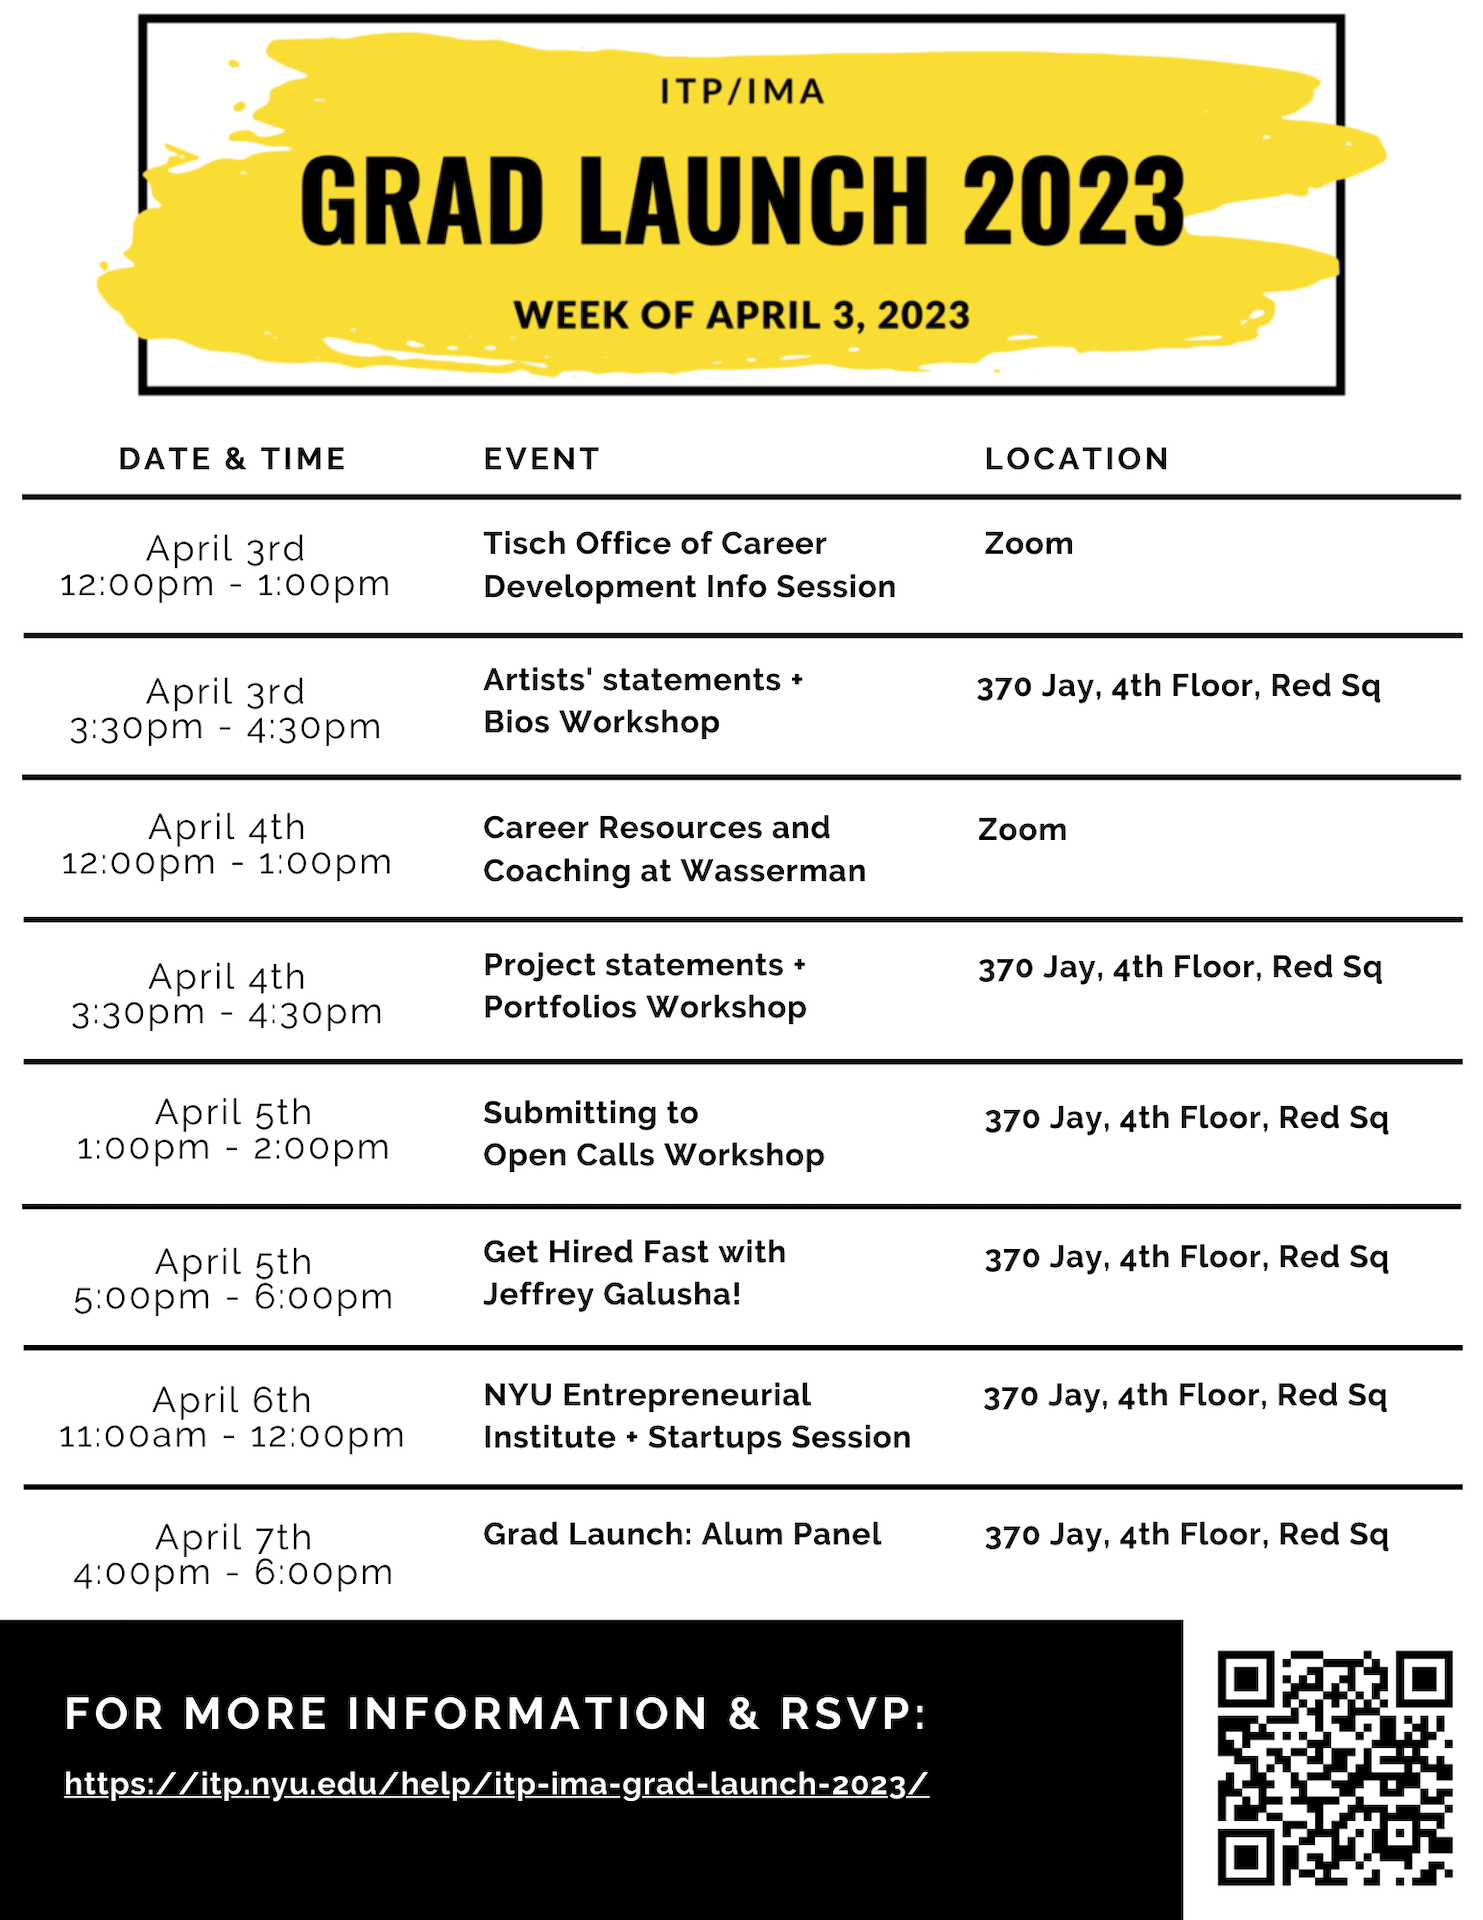 Schedule for Grad Launch 2023